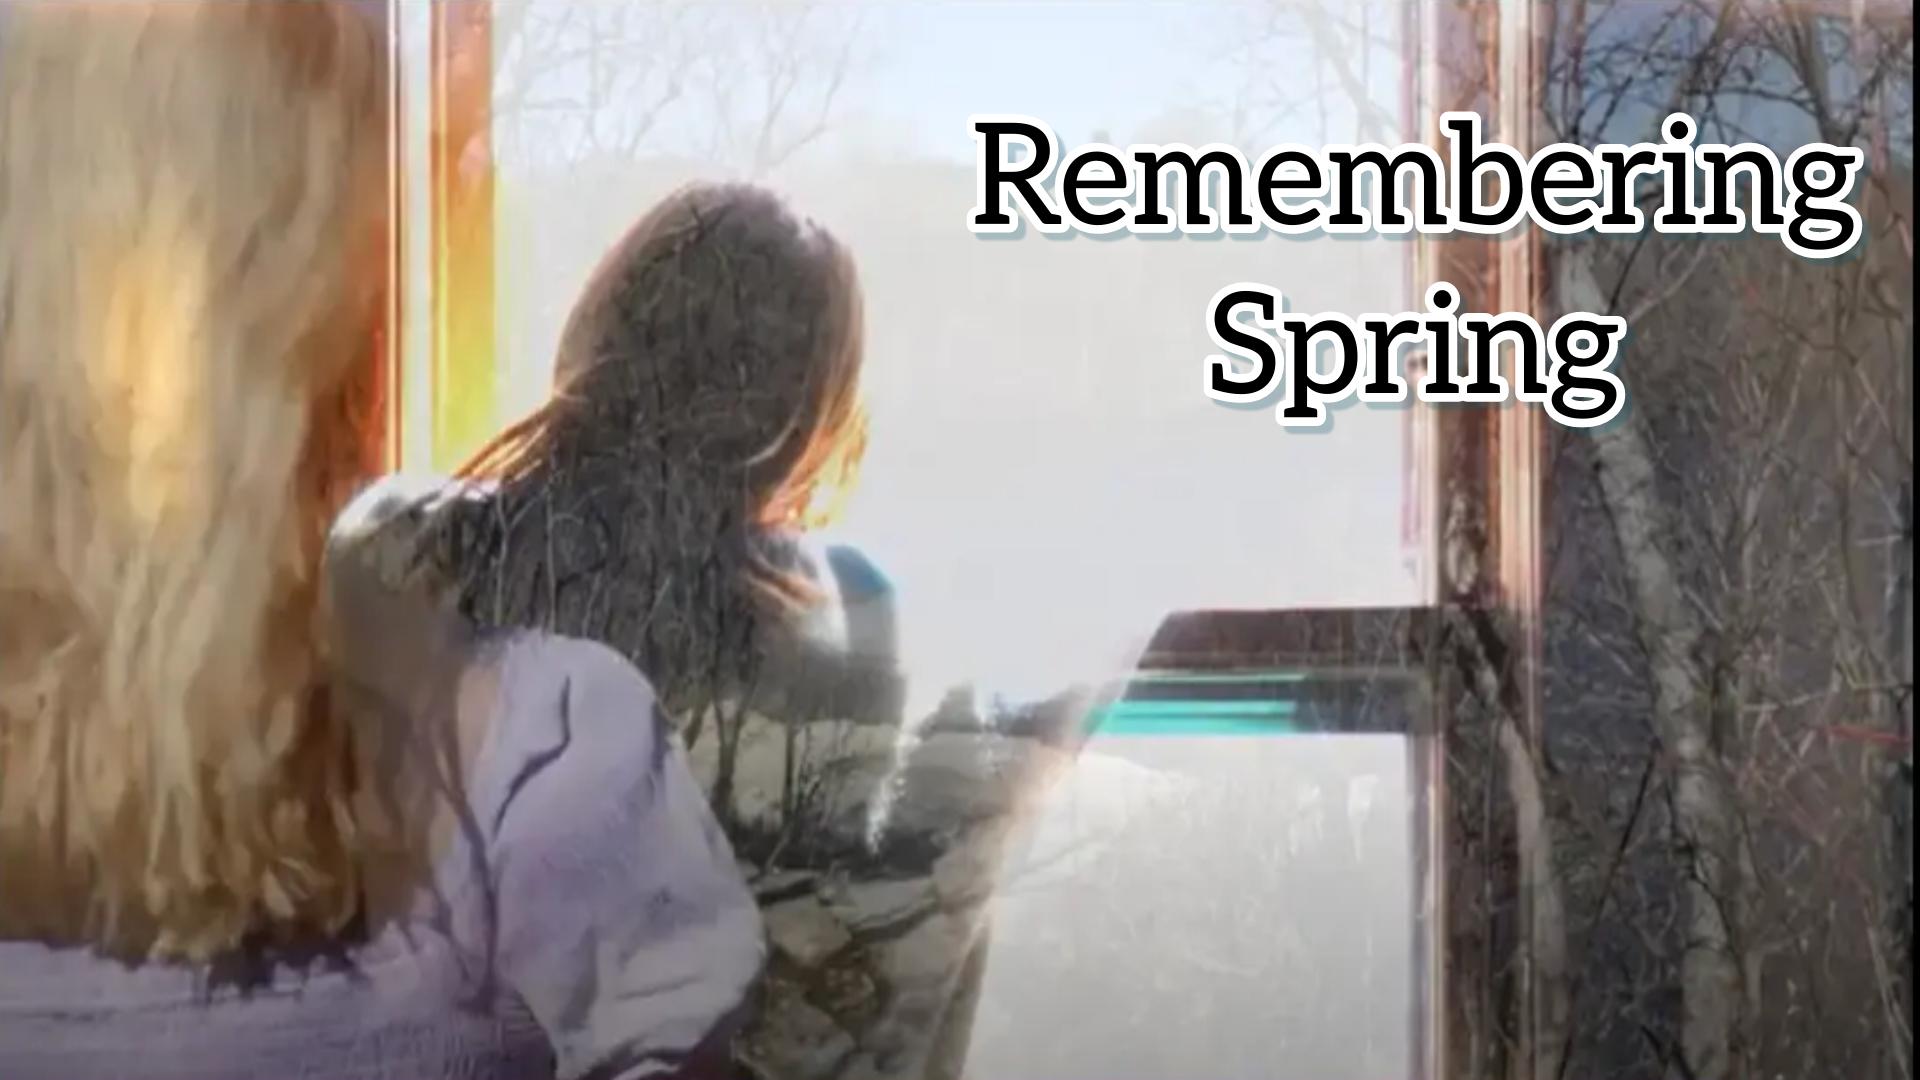 Remembering Spring